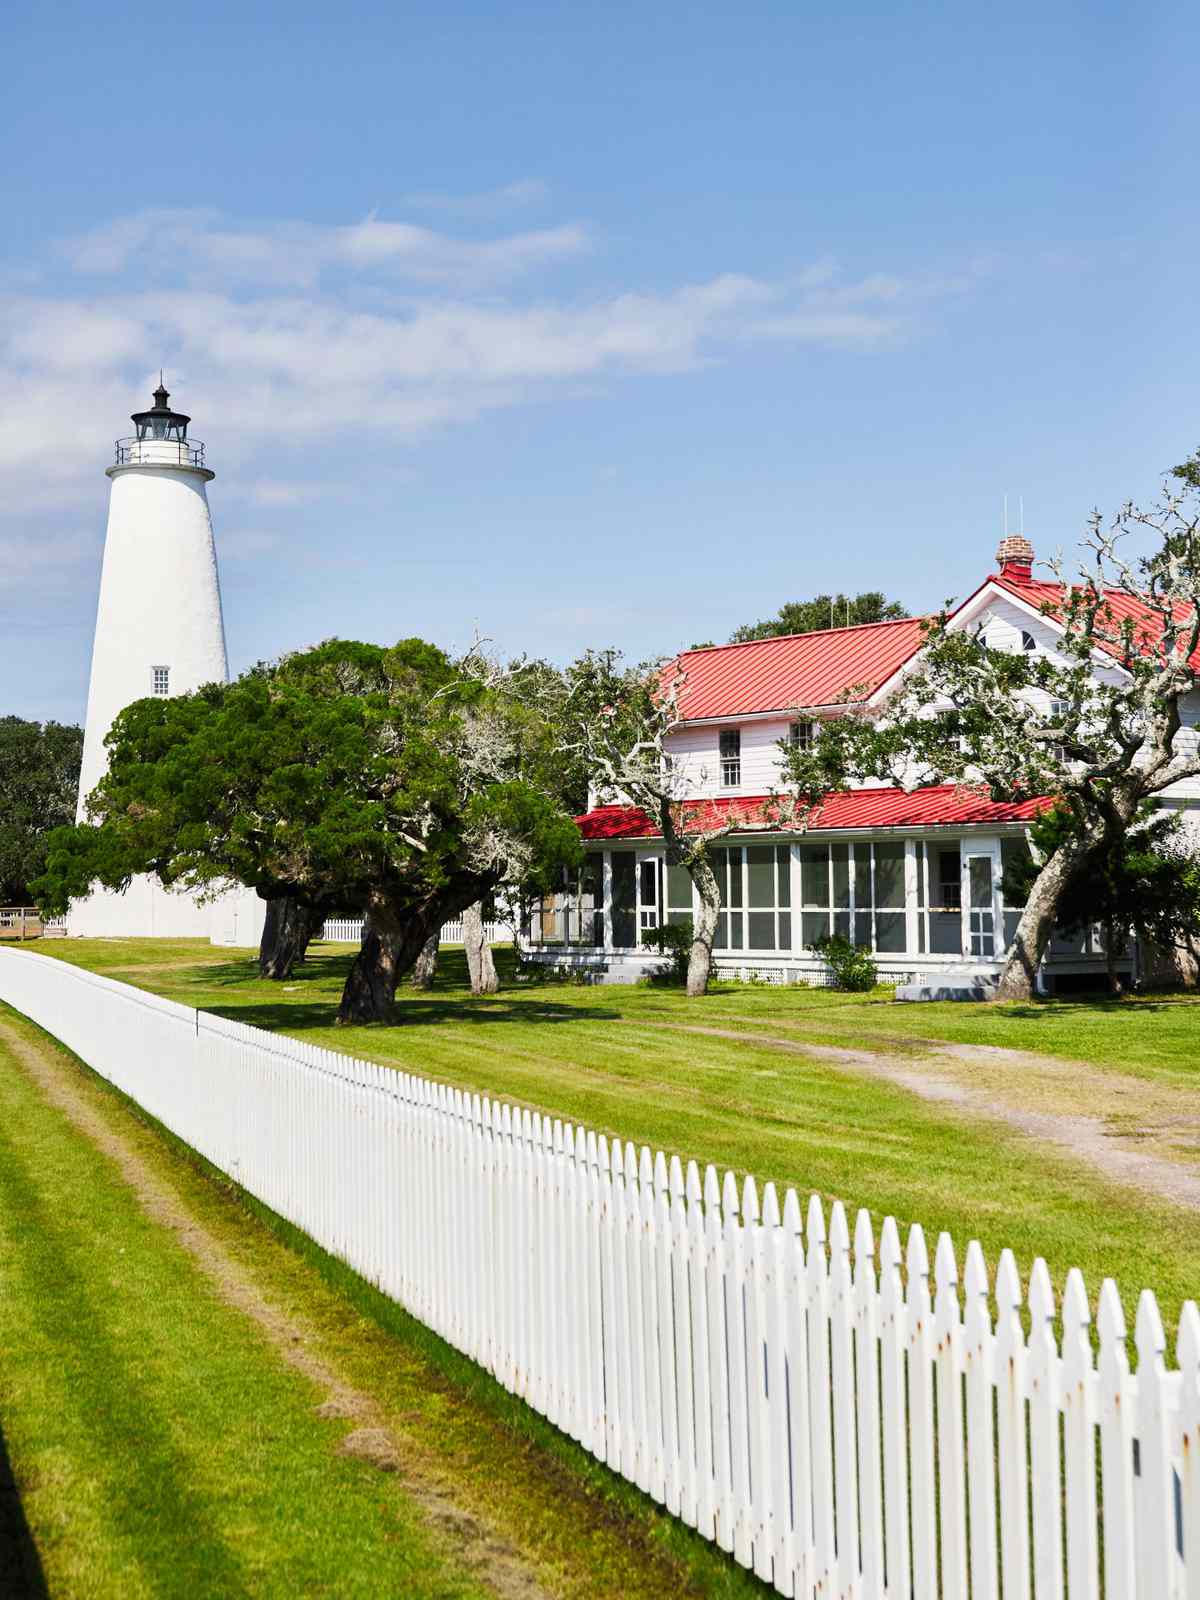 The Ocracoke Lighthouse in North Carolina